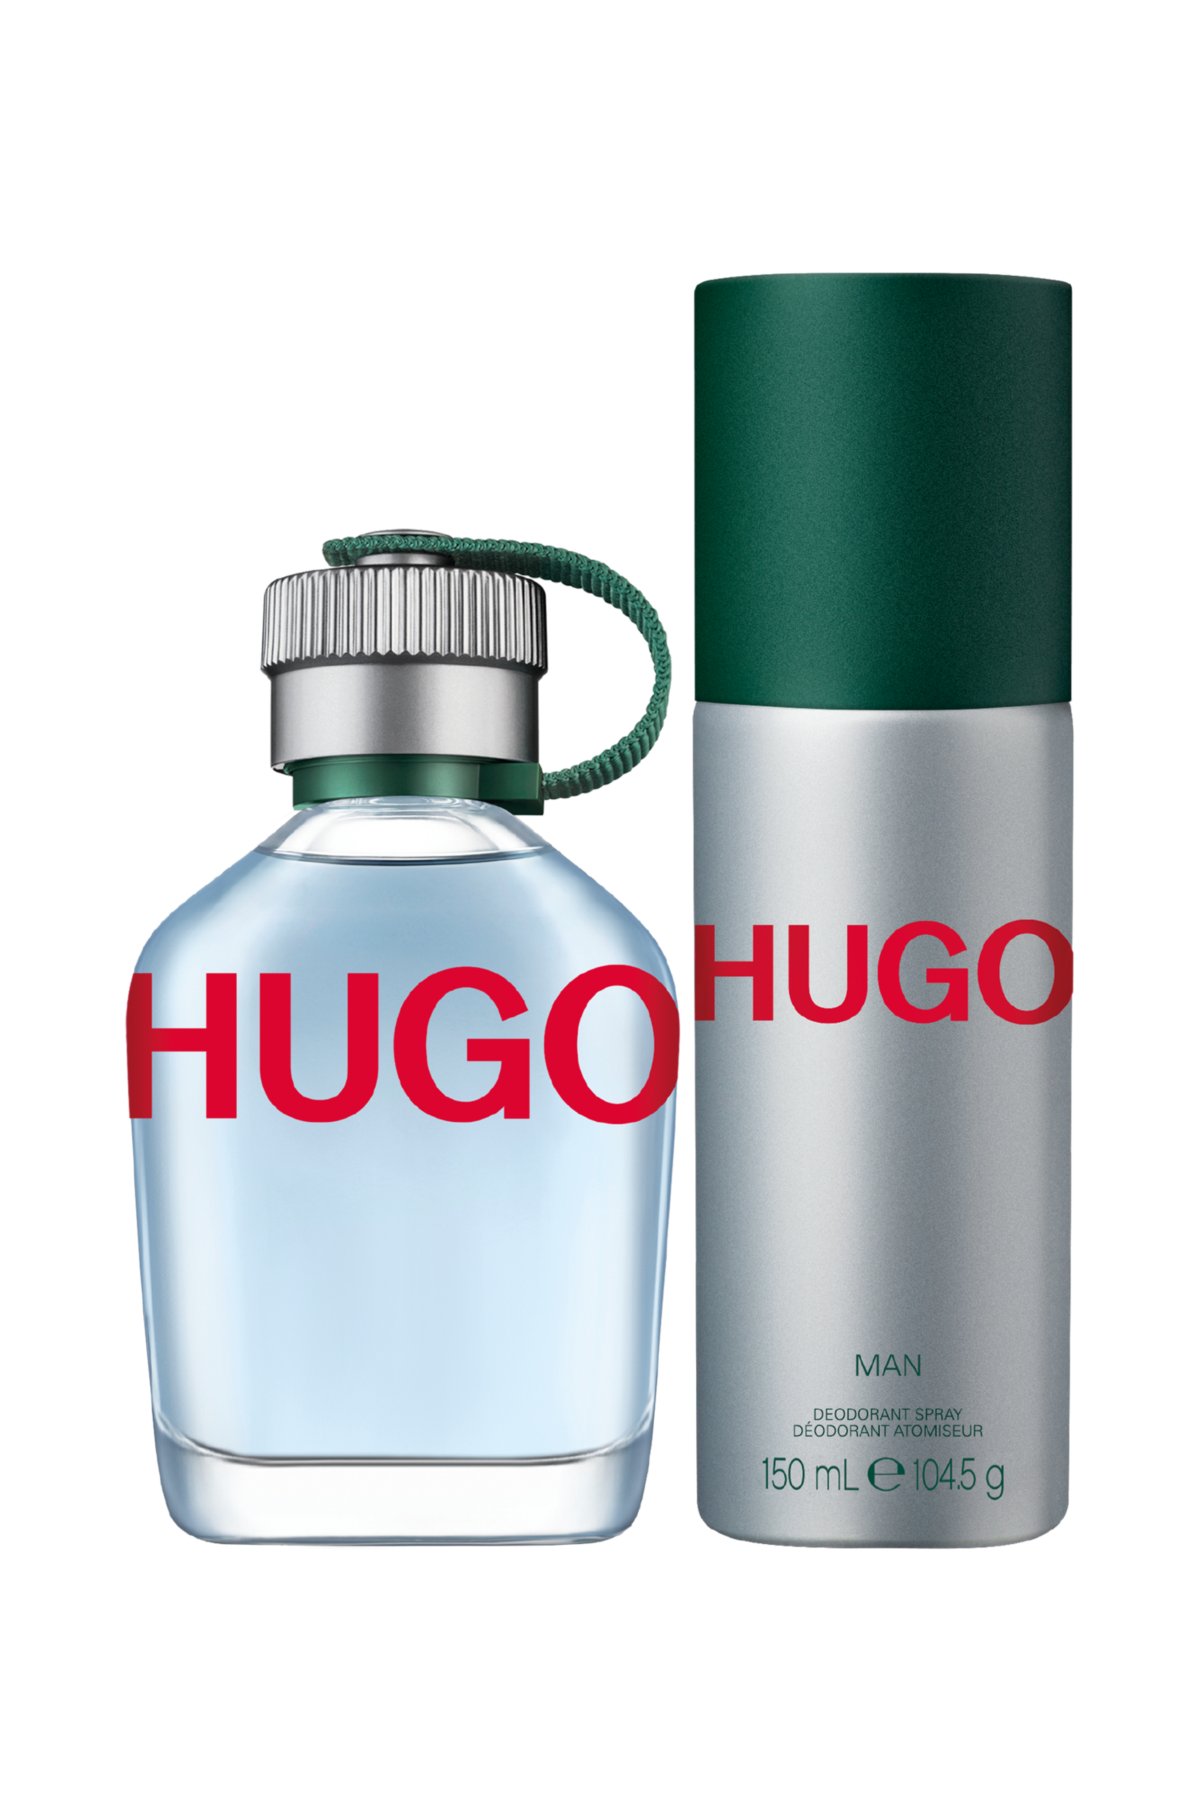 HUGO Man eau de toilette gift set, Assorted-Pre-Pack